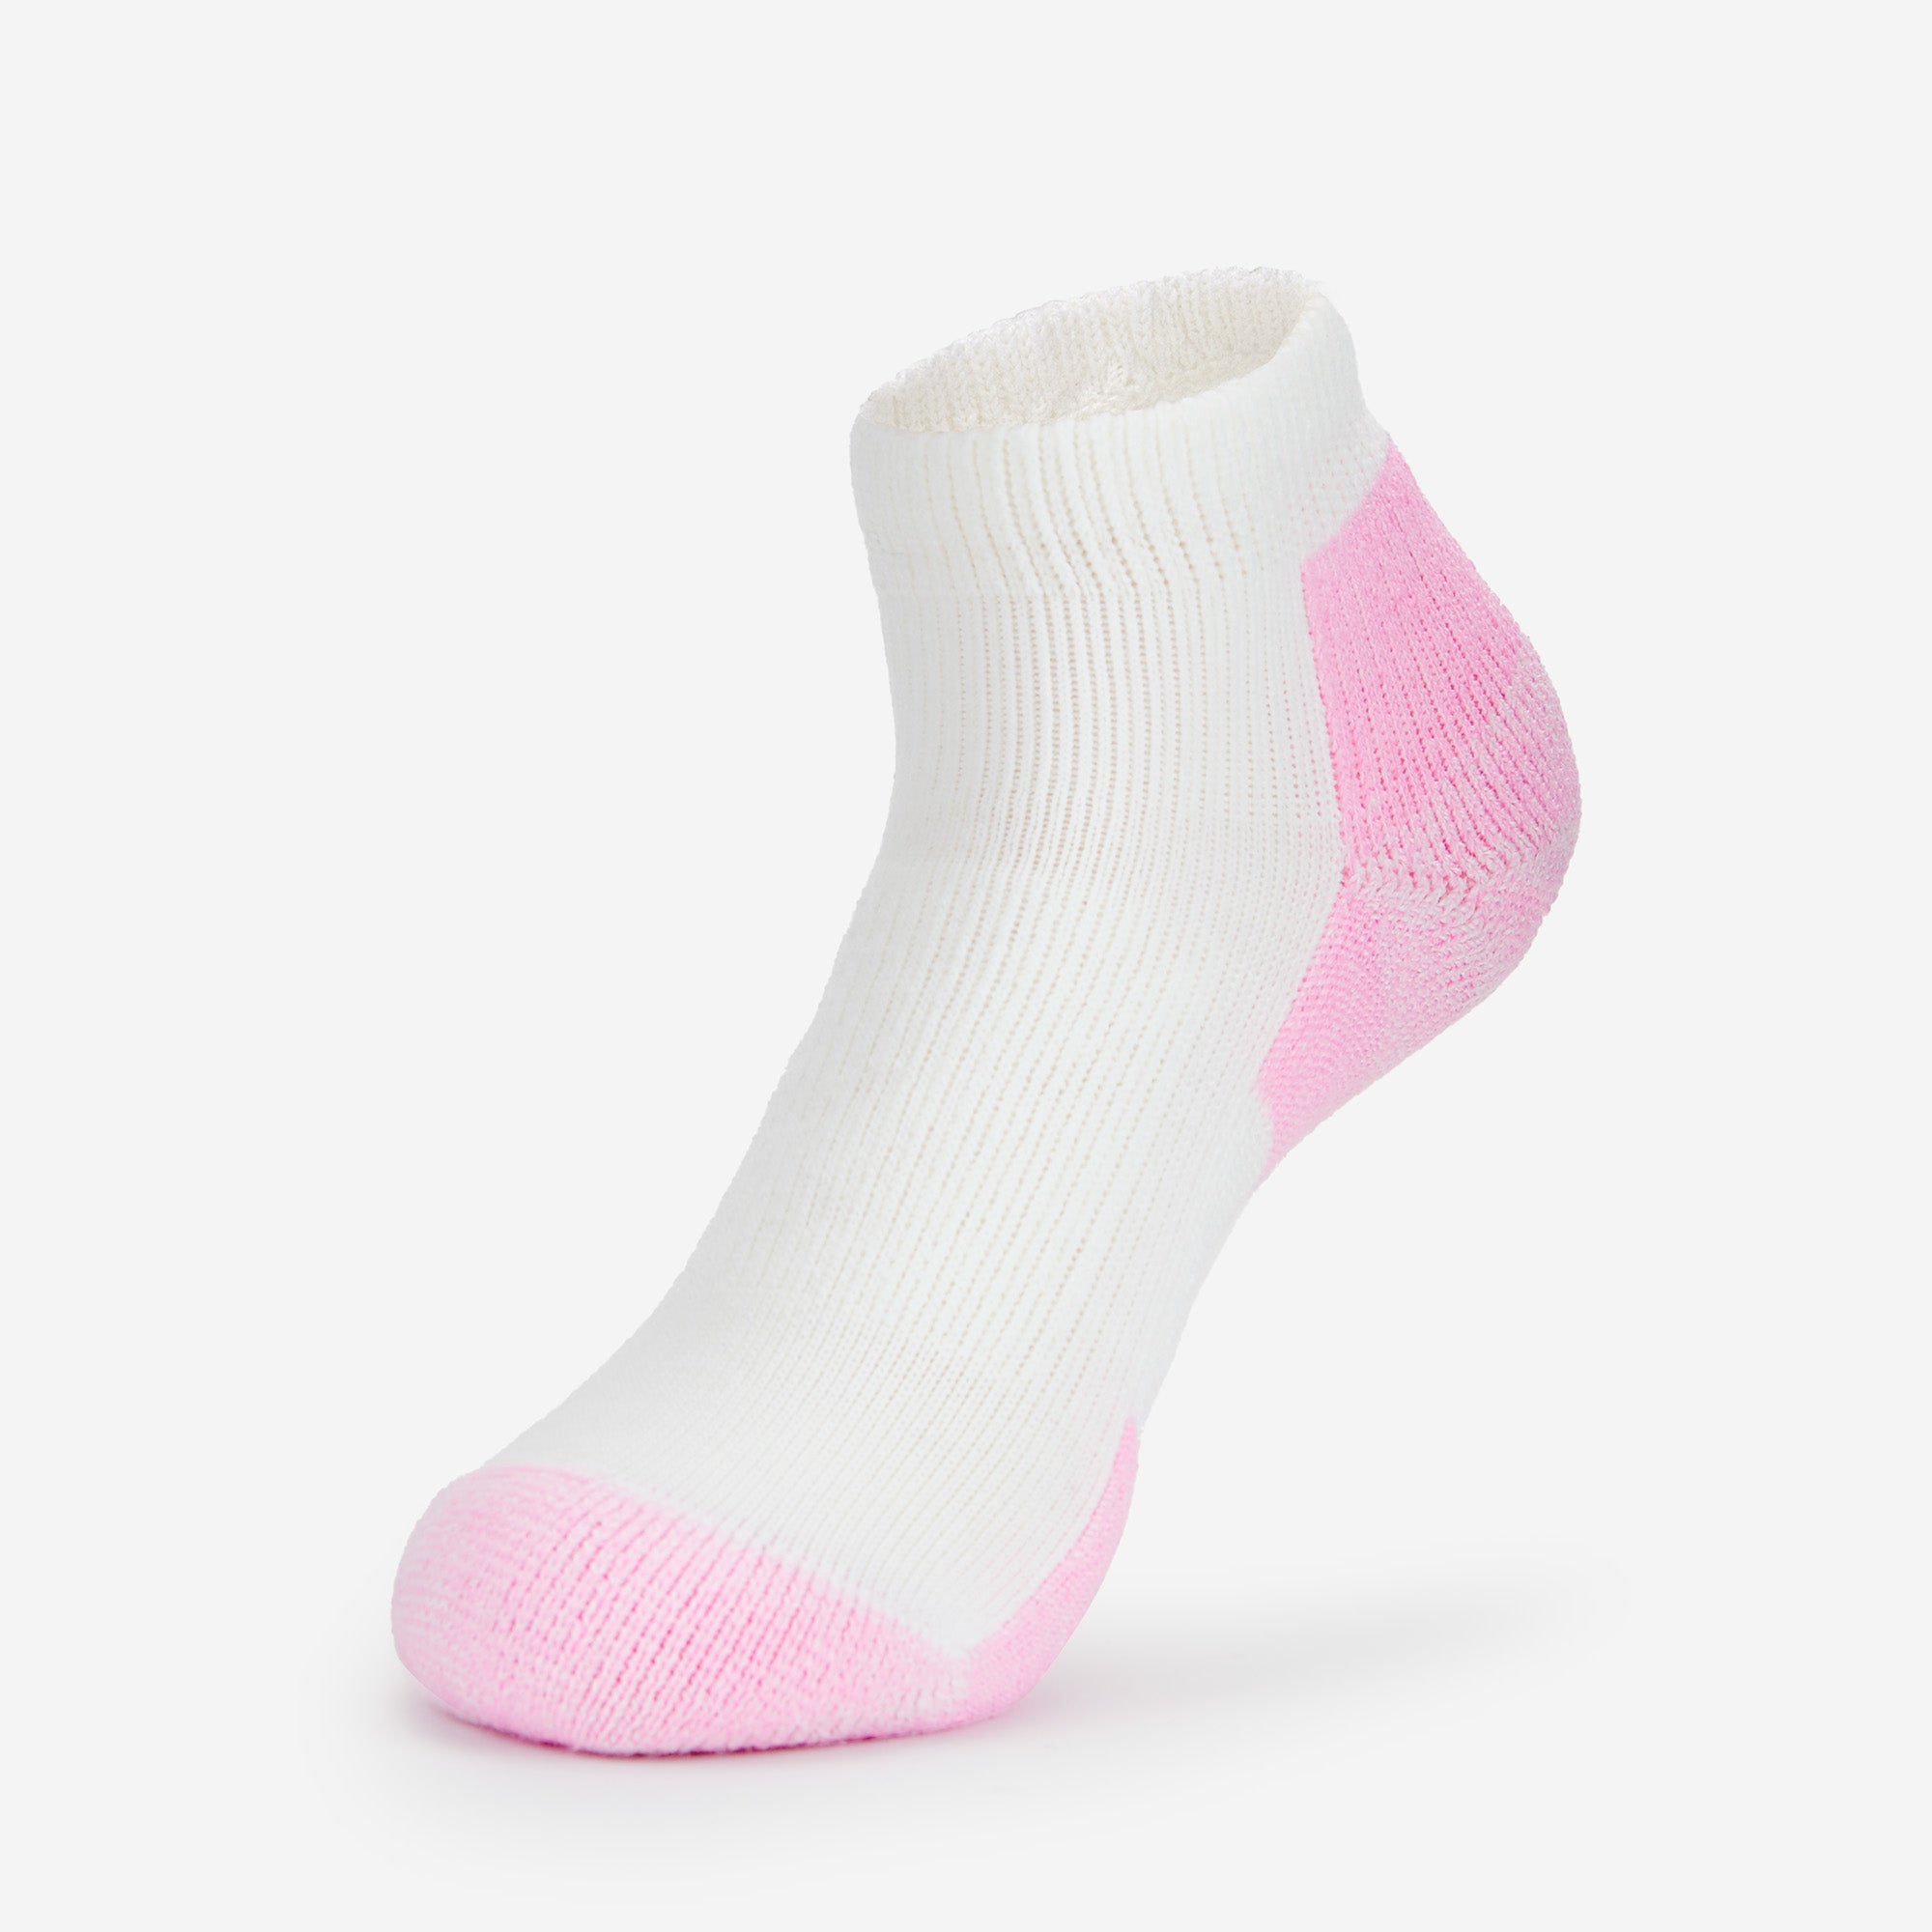 Women's Maximum Cushion Socks: Extra-Thick Padding